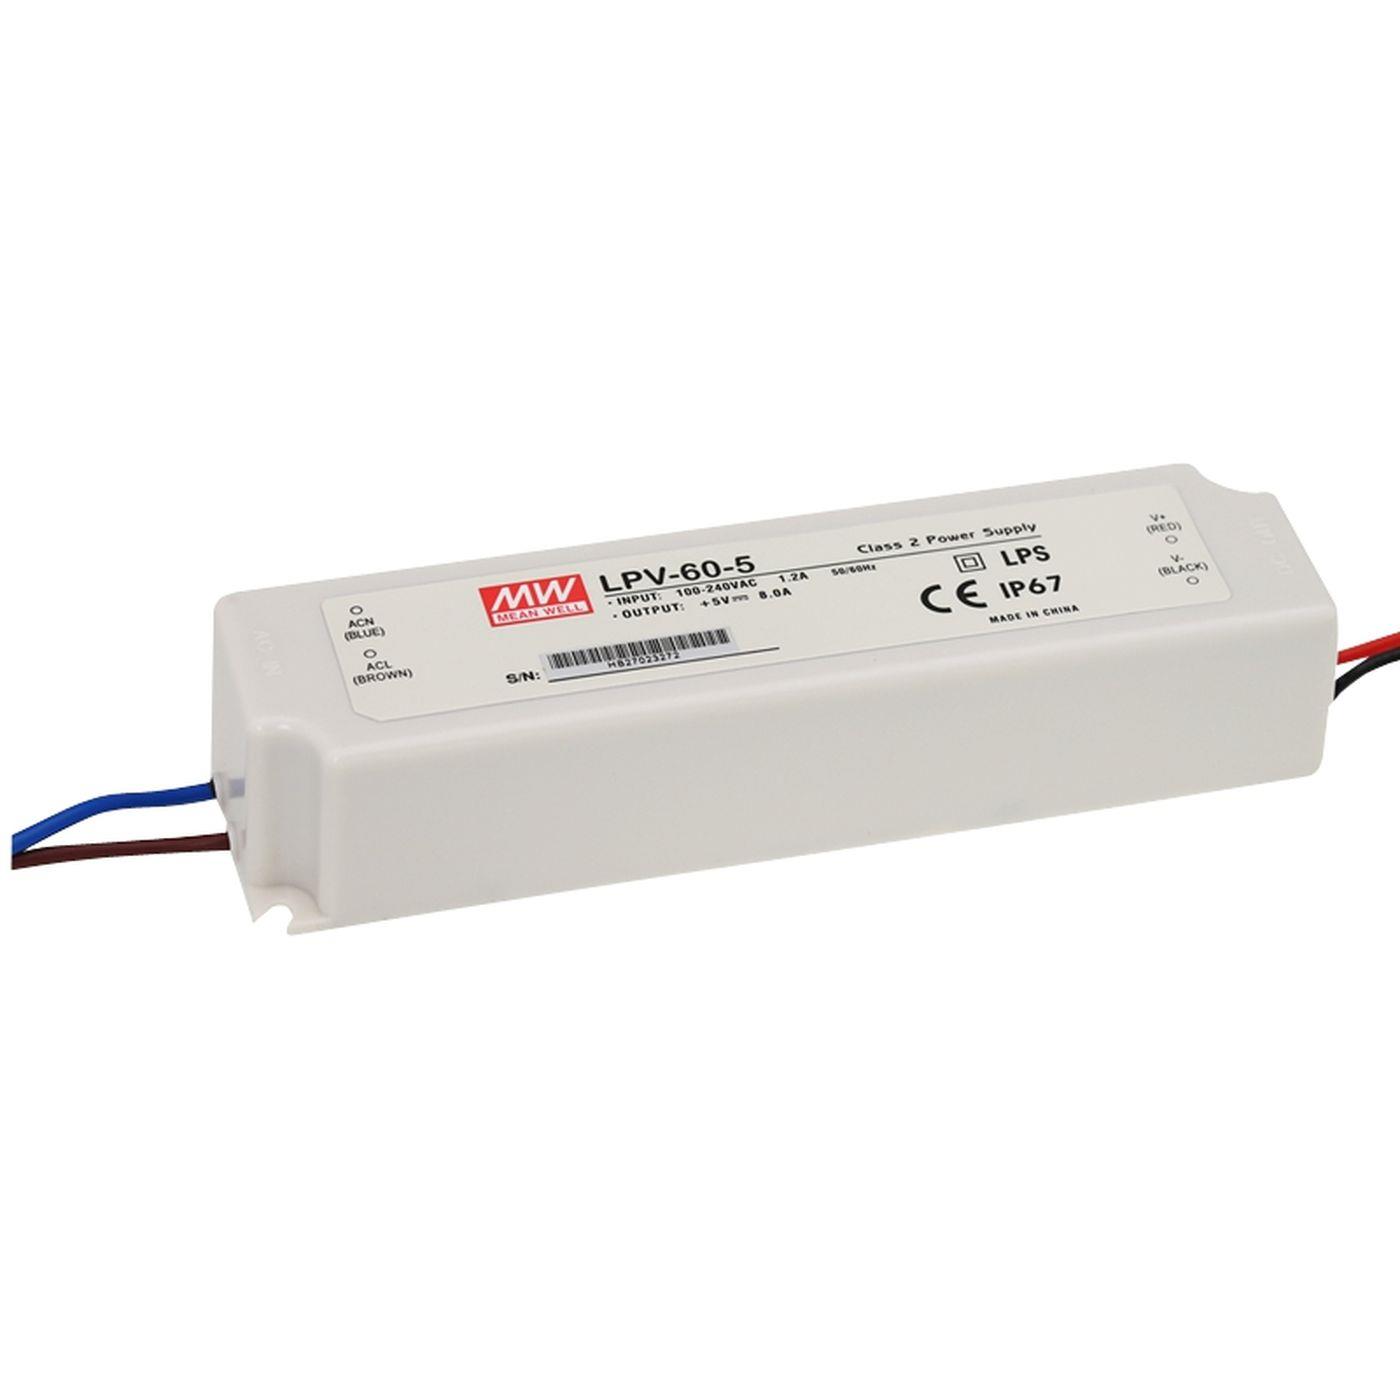 LPV-60-5 40W 5V 8A LED power supply Transformer Driver IP67